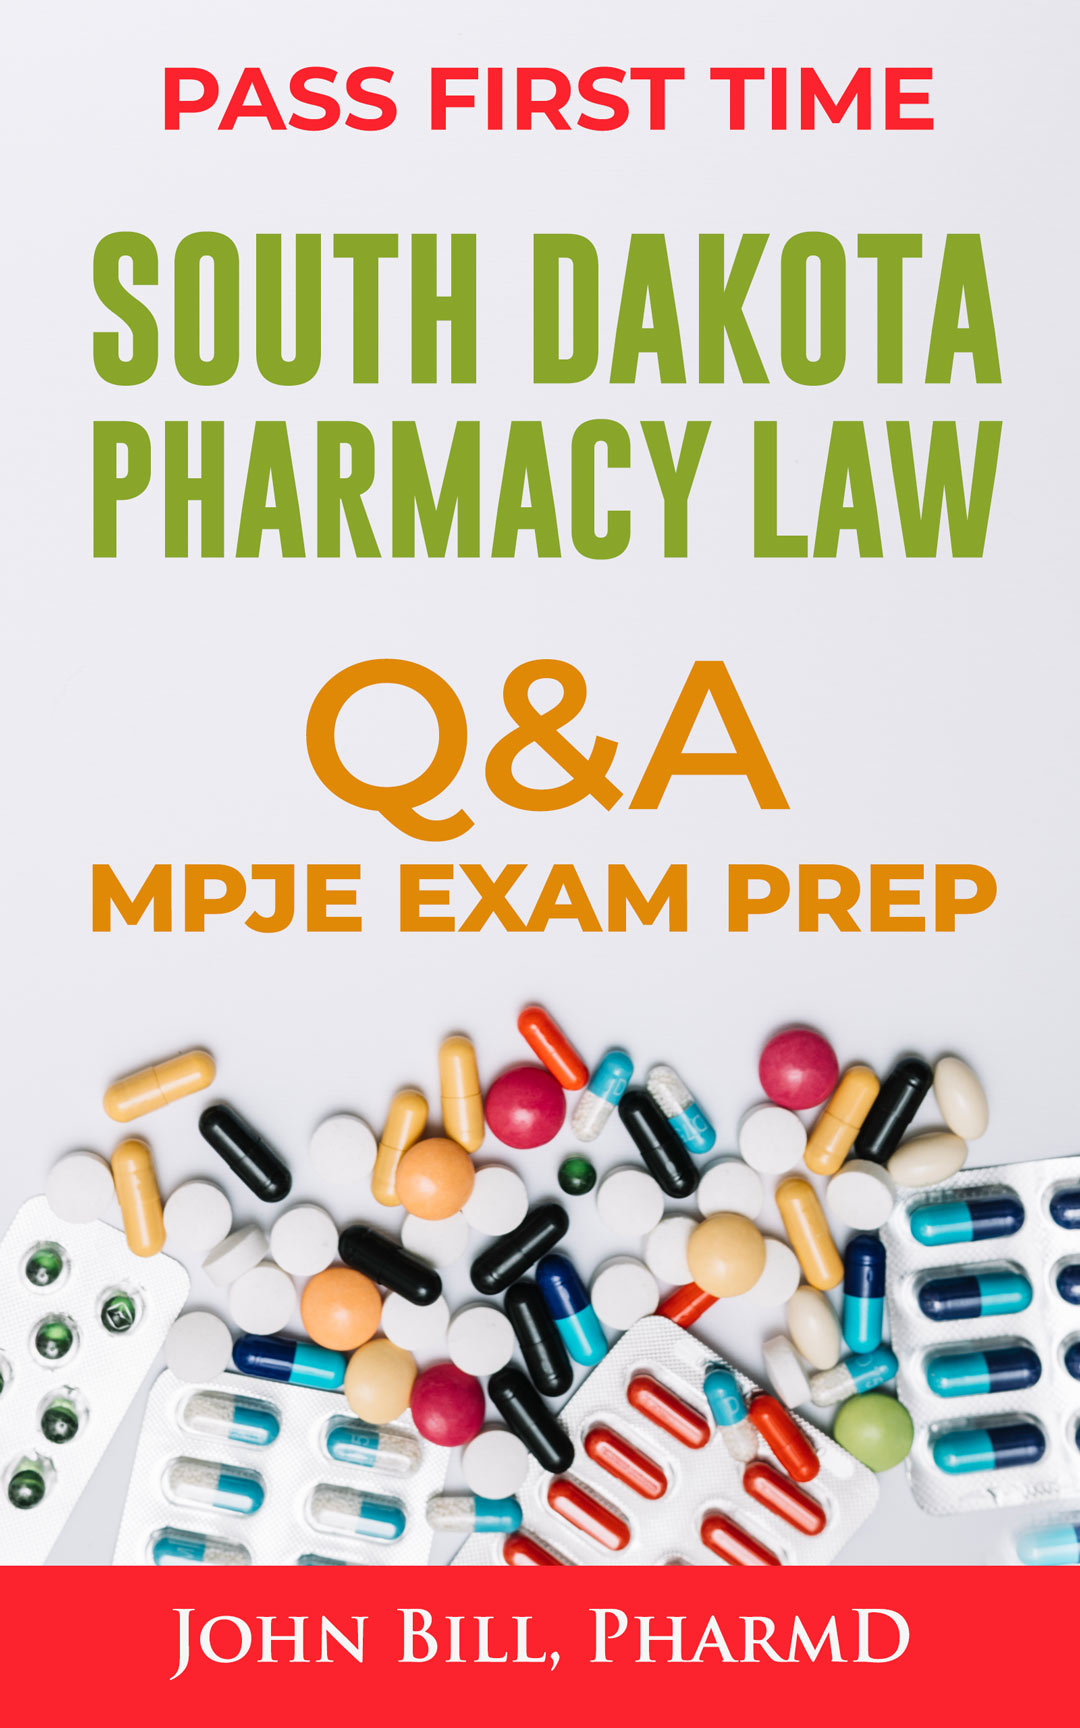 South Dakota Pharmacy Law MPJE Exam Prep Q & A